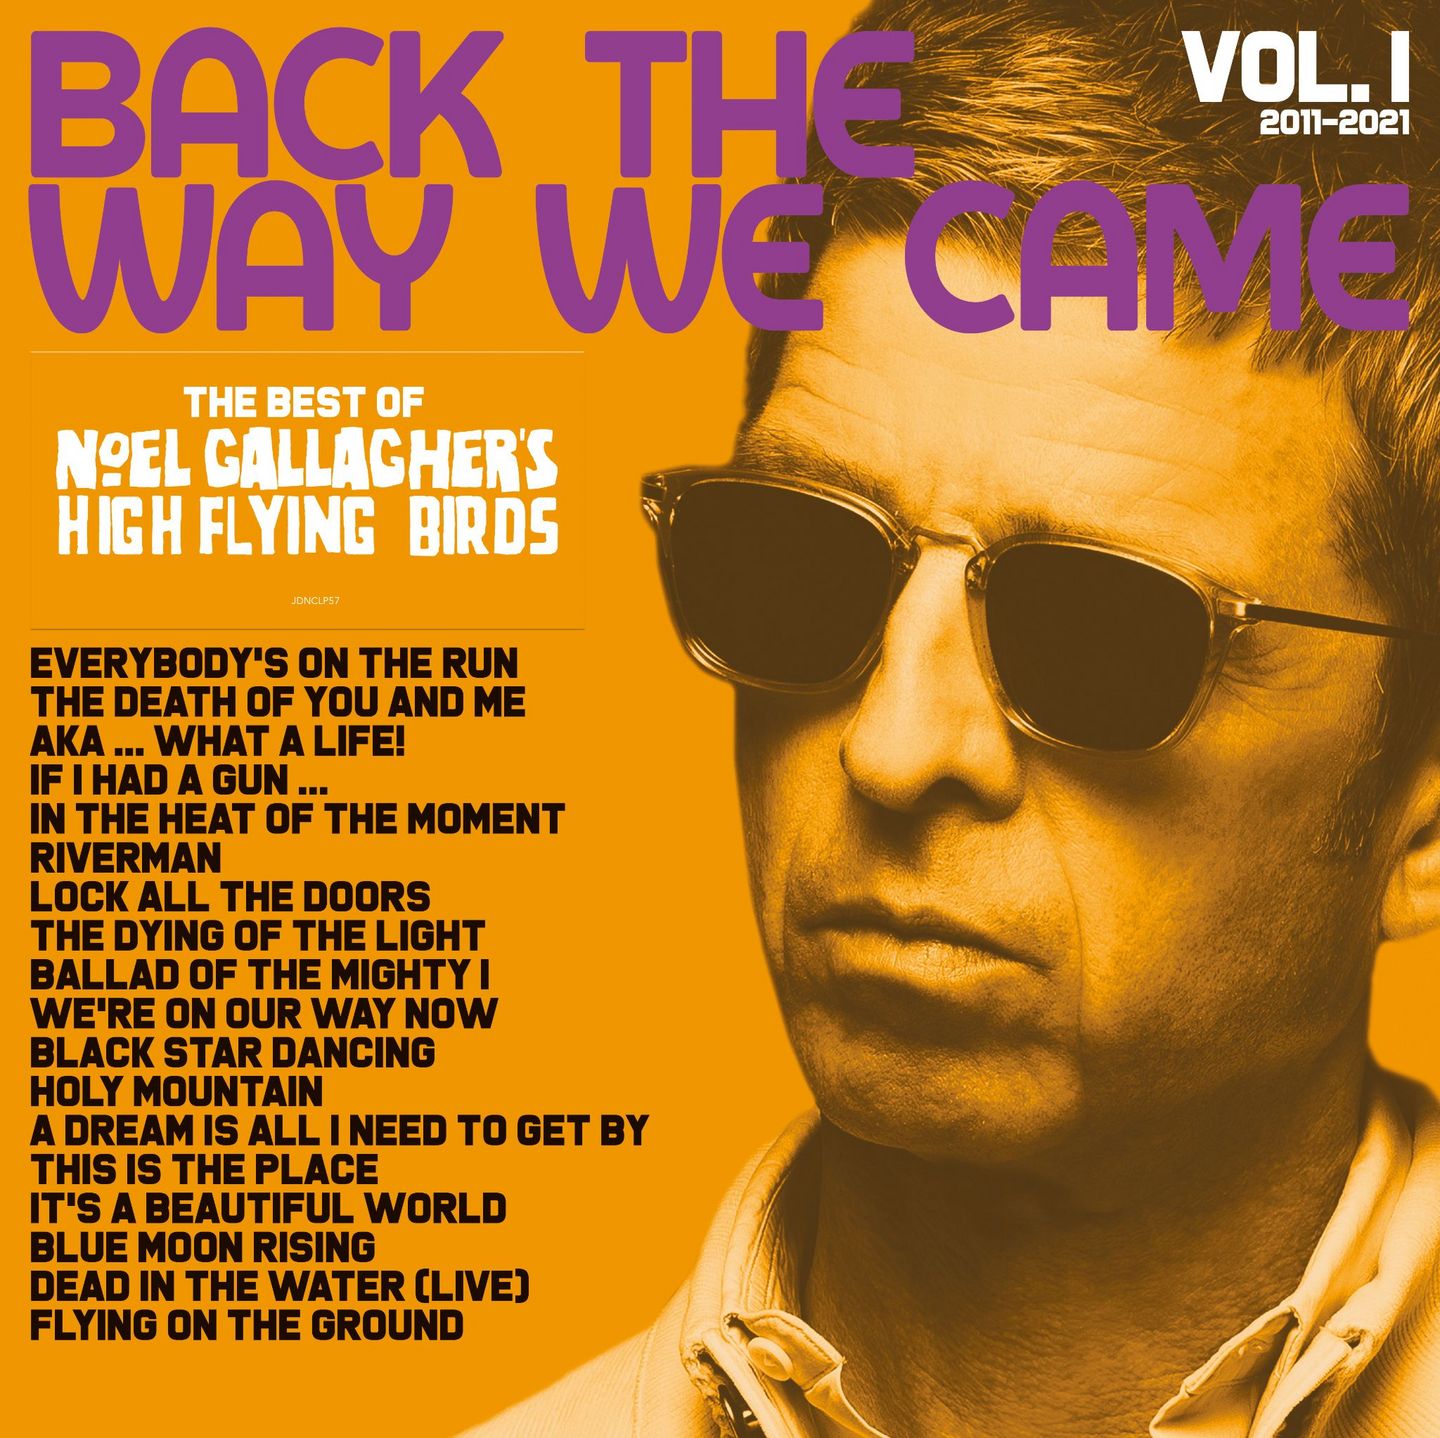 Noel Gallagher's High Flying Birds - Back the Way We Came, Best Of Vol I 2011-2021  (Vinyl 2LP)